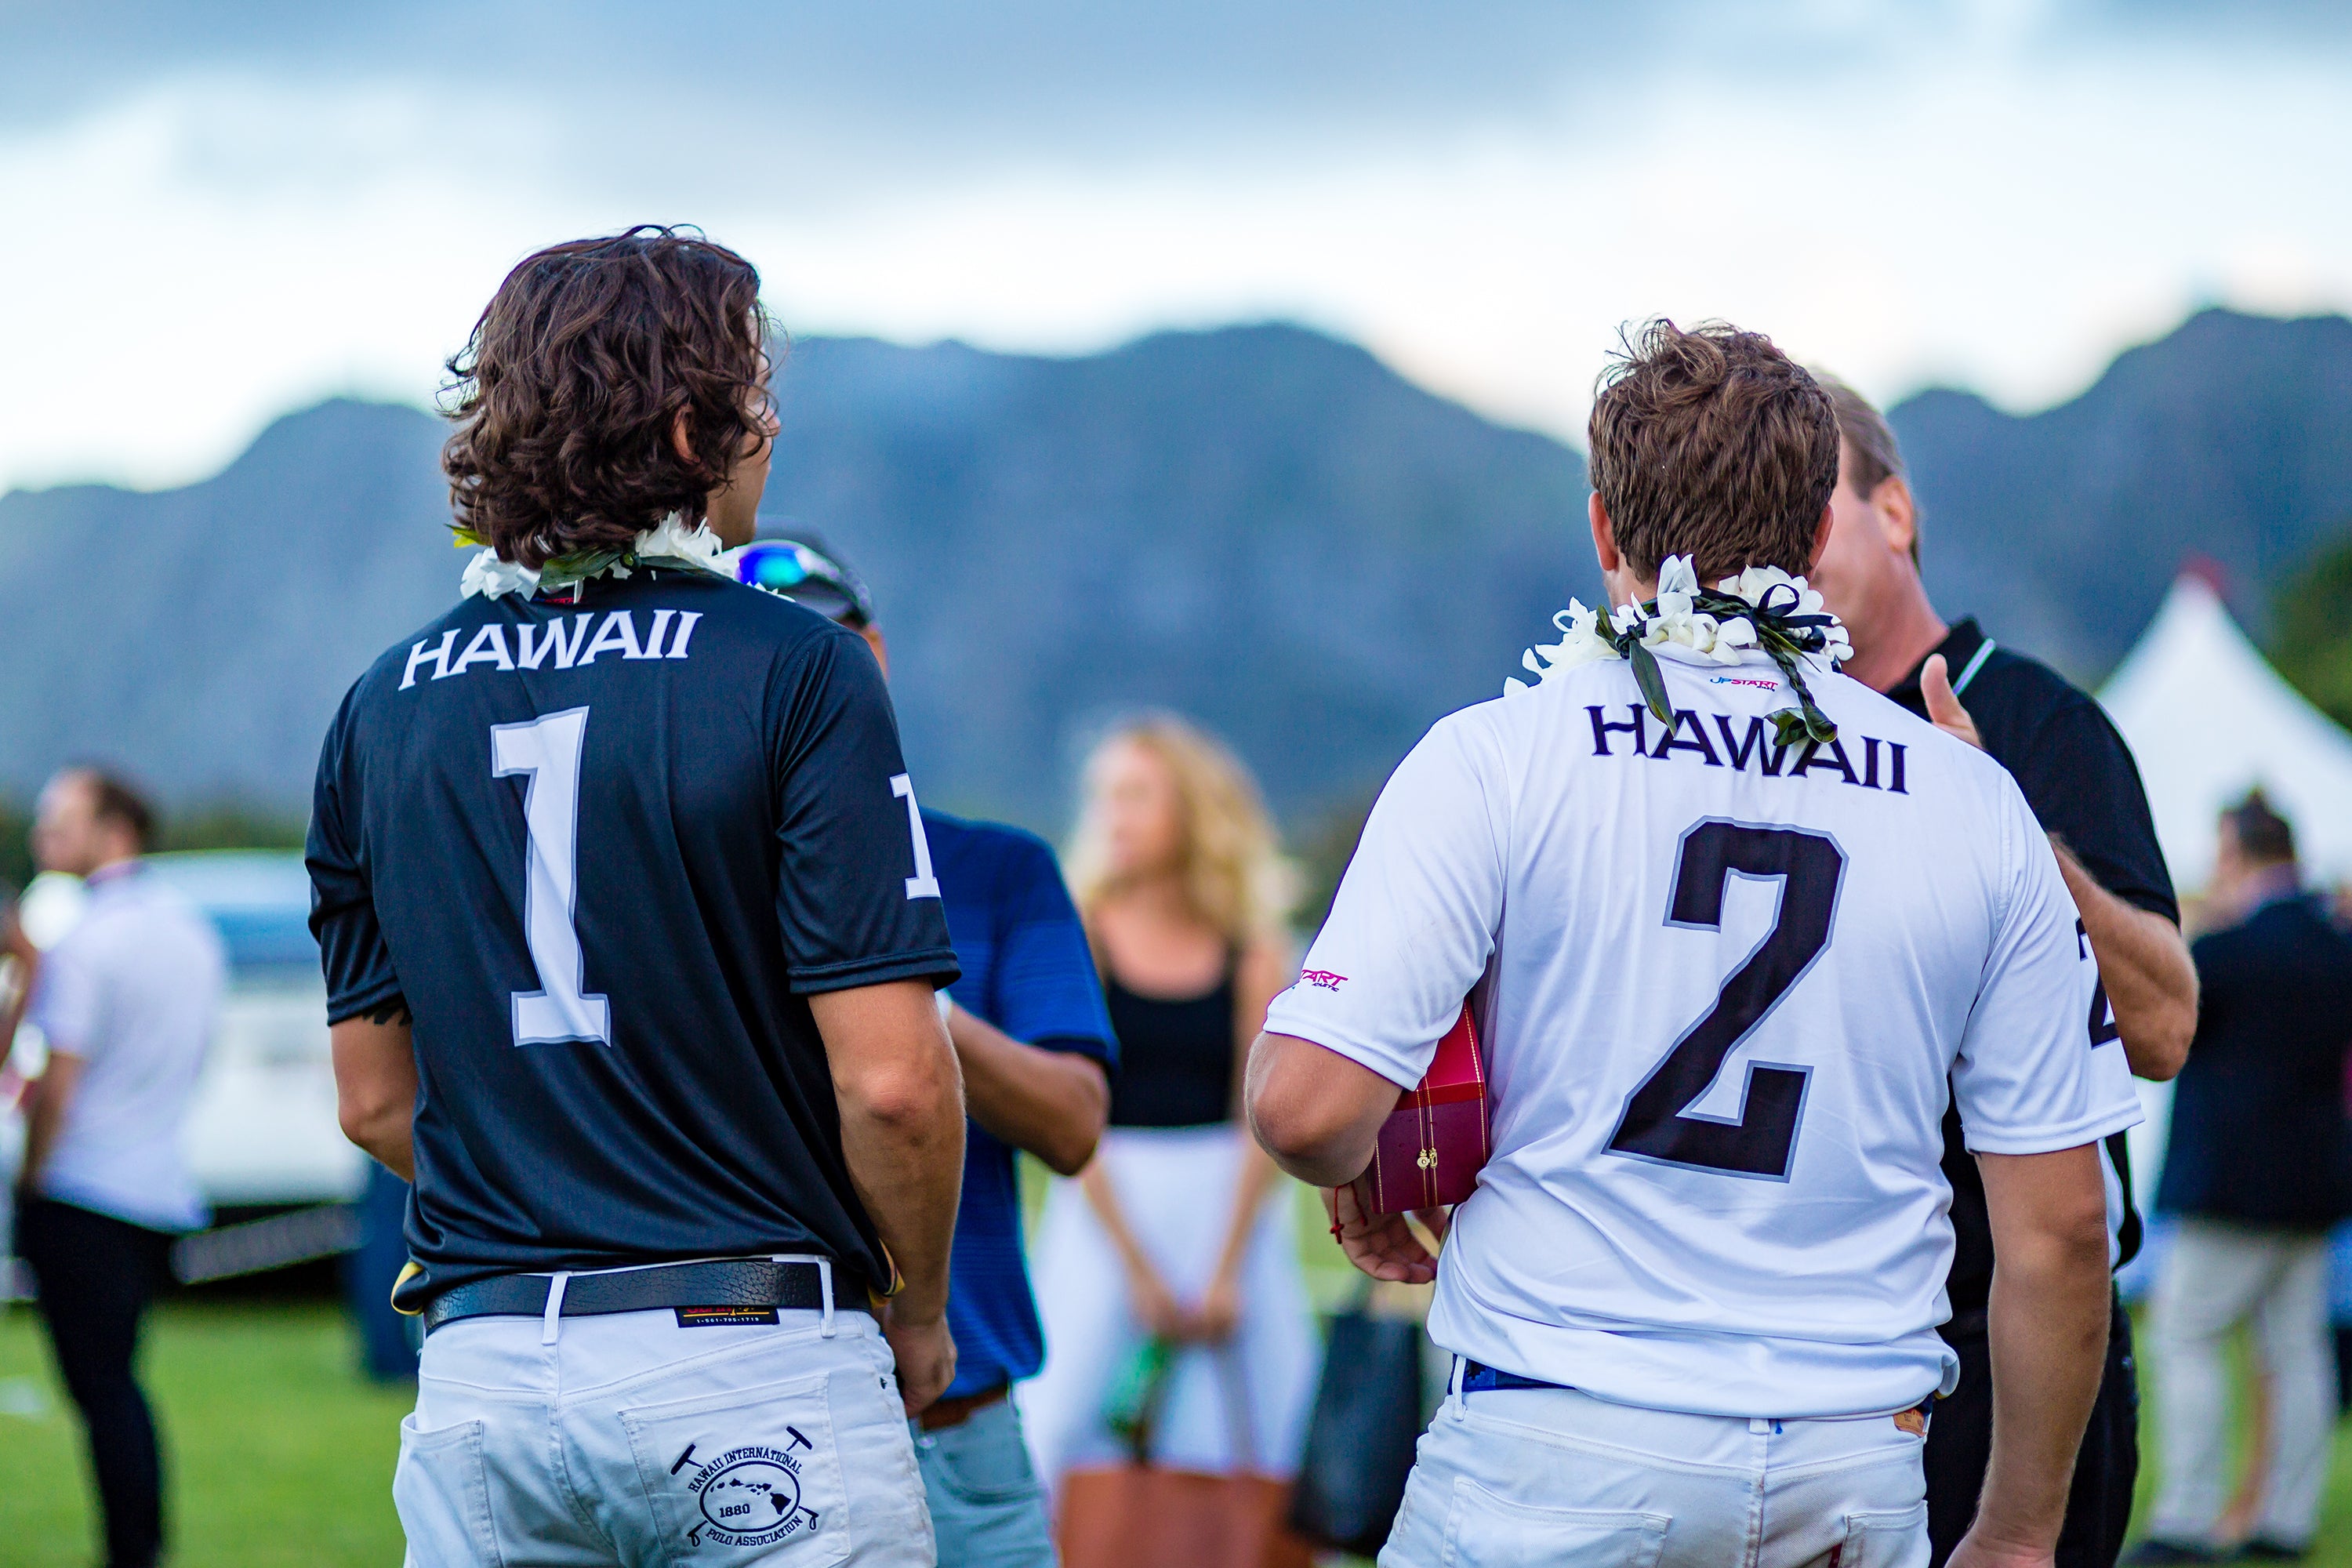 Nano Gracida and  Santi Torres in Hawaii Polo Life Team Jersey's at Hawaii International Polo Association Invitational in Honolulu